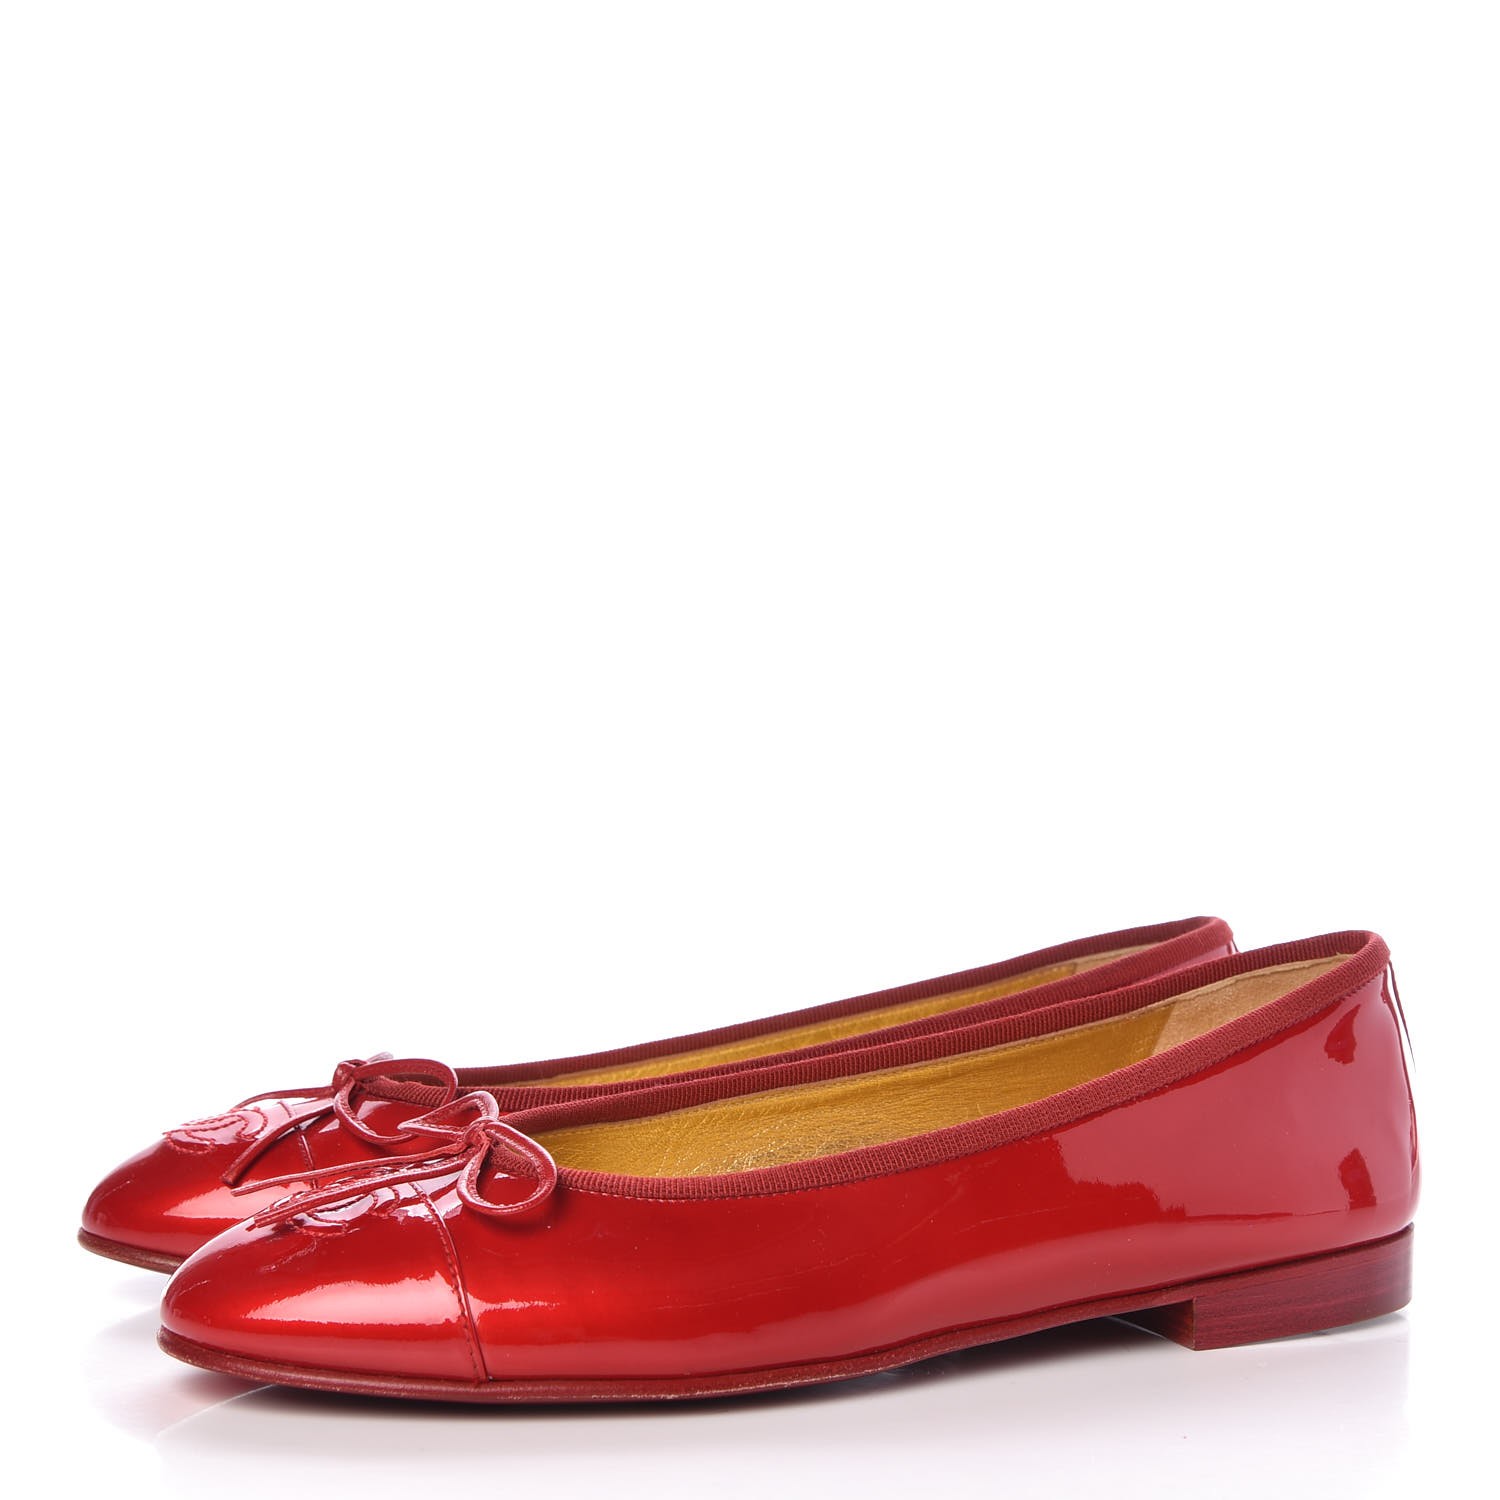 CHANEL Patent Calfskin CC Cap Toe Ballerina Flats 38.5 Red 306013